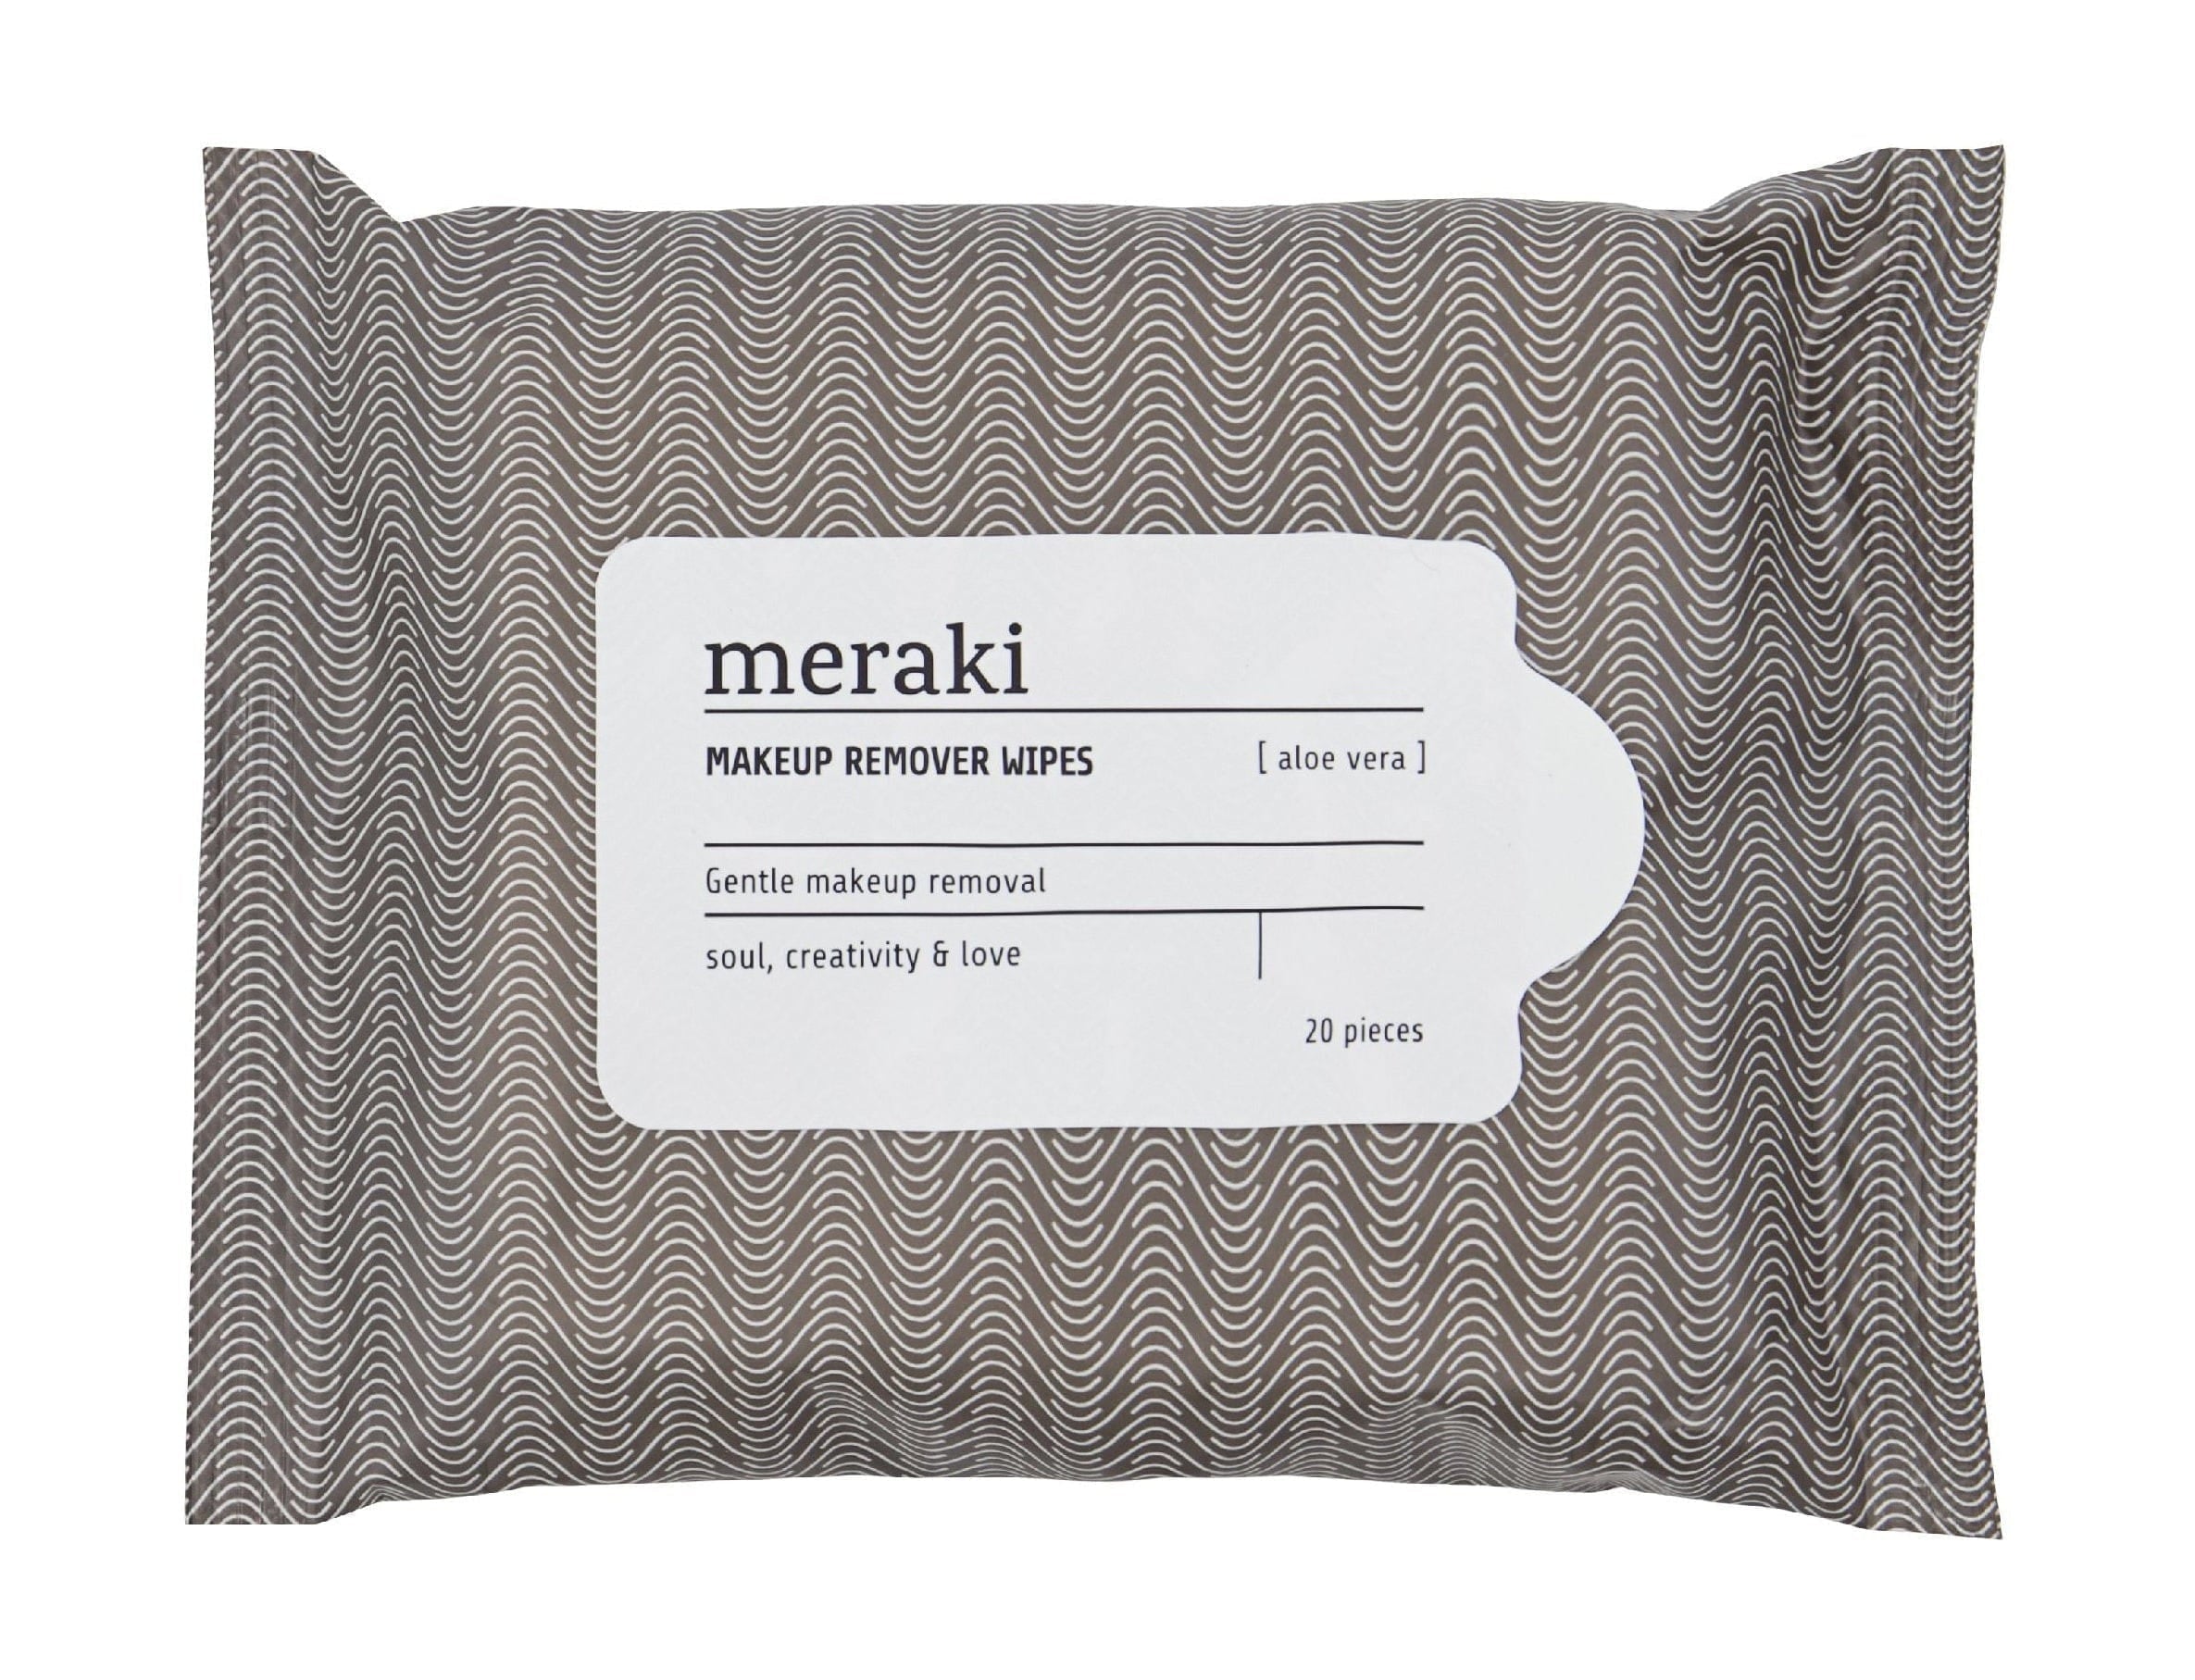 Meraki Makeup Remover Wipes Aloe Vera 20 st., Varm grå/vit